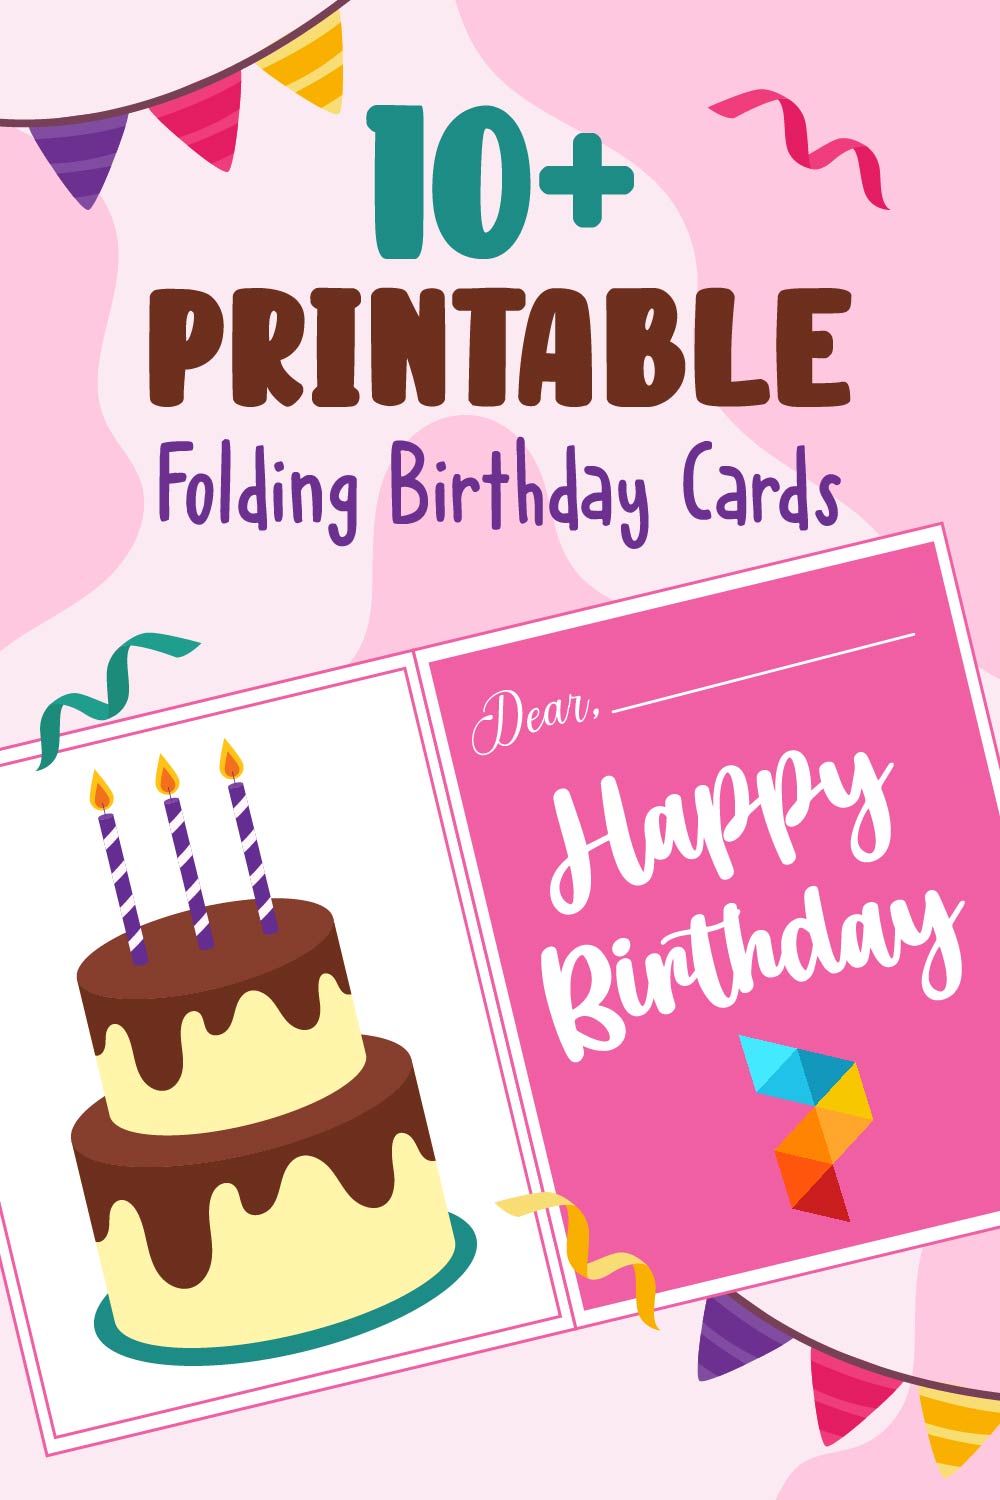 Folding Birthday Cards